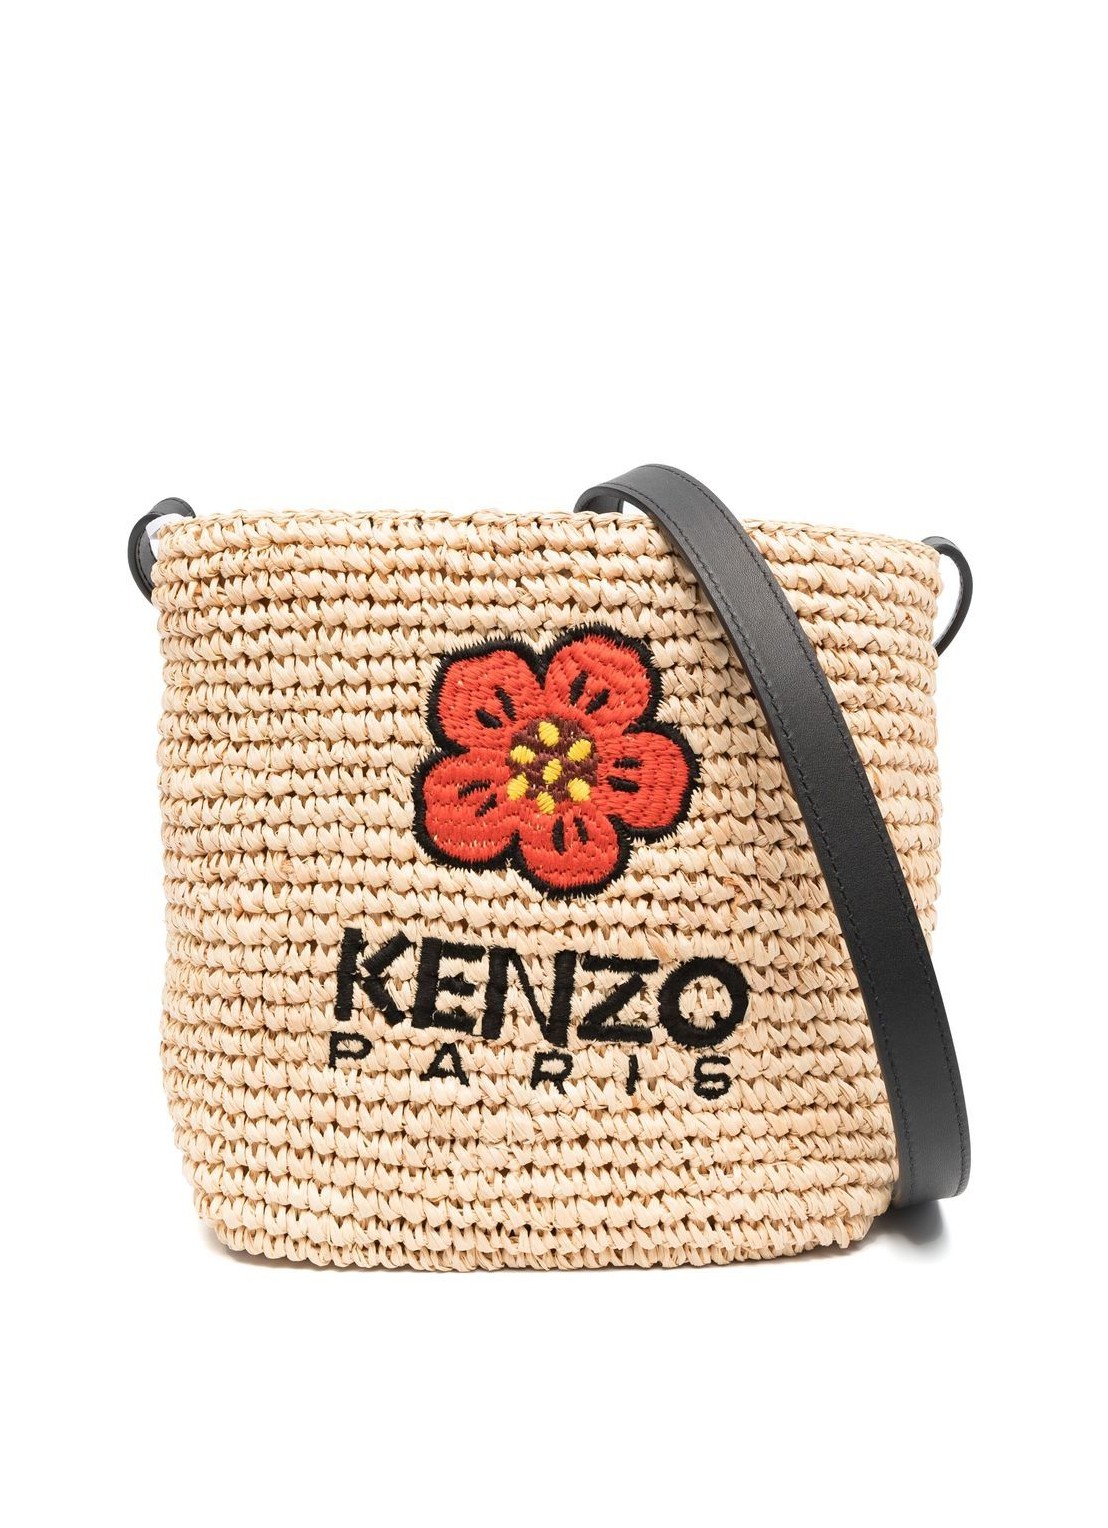 Crossbody kenzo crossbody woman mini bucket bag fd52sa524f02 99 talla negro
 